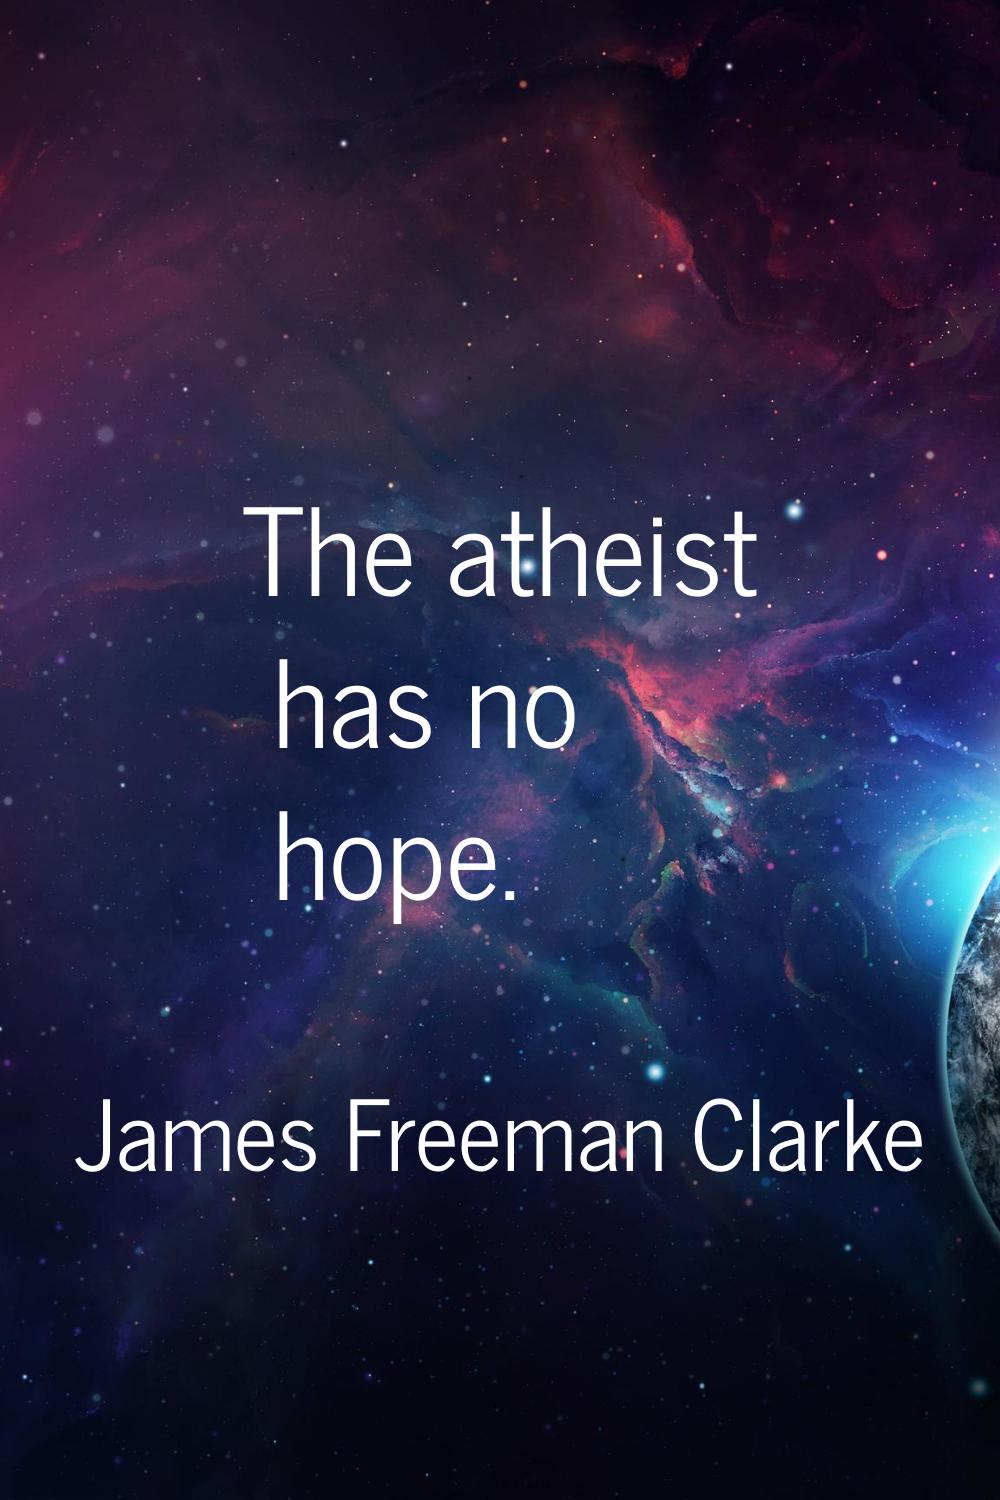 The atheist has no hope.